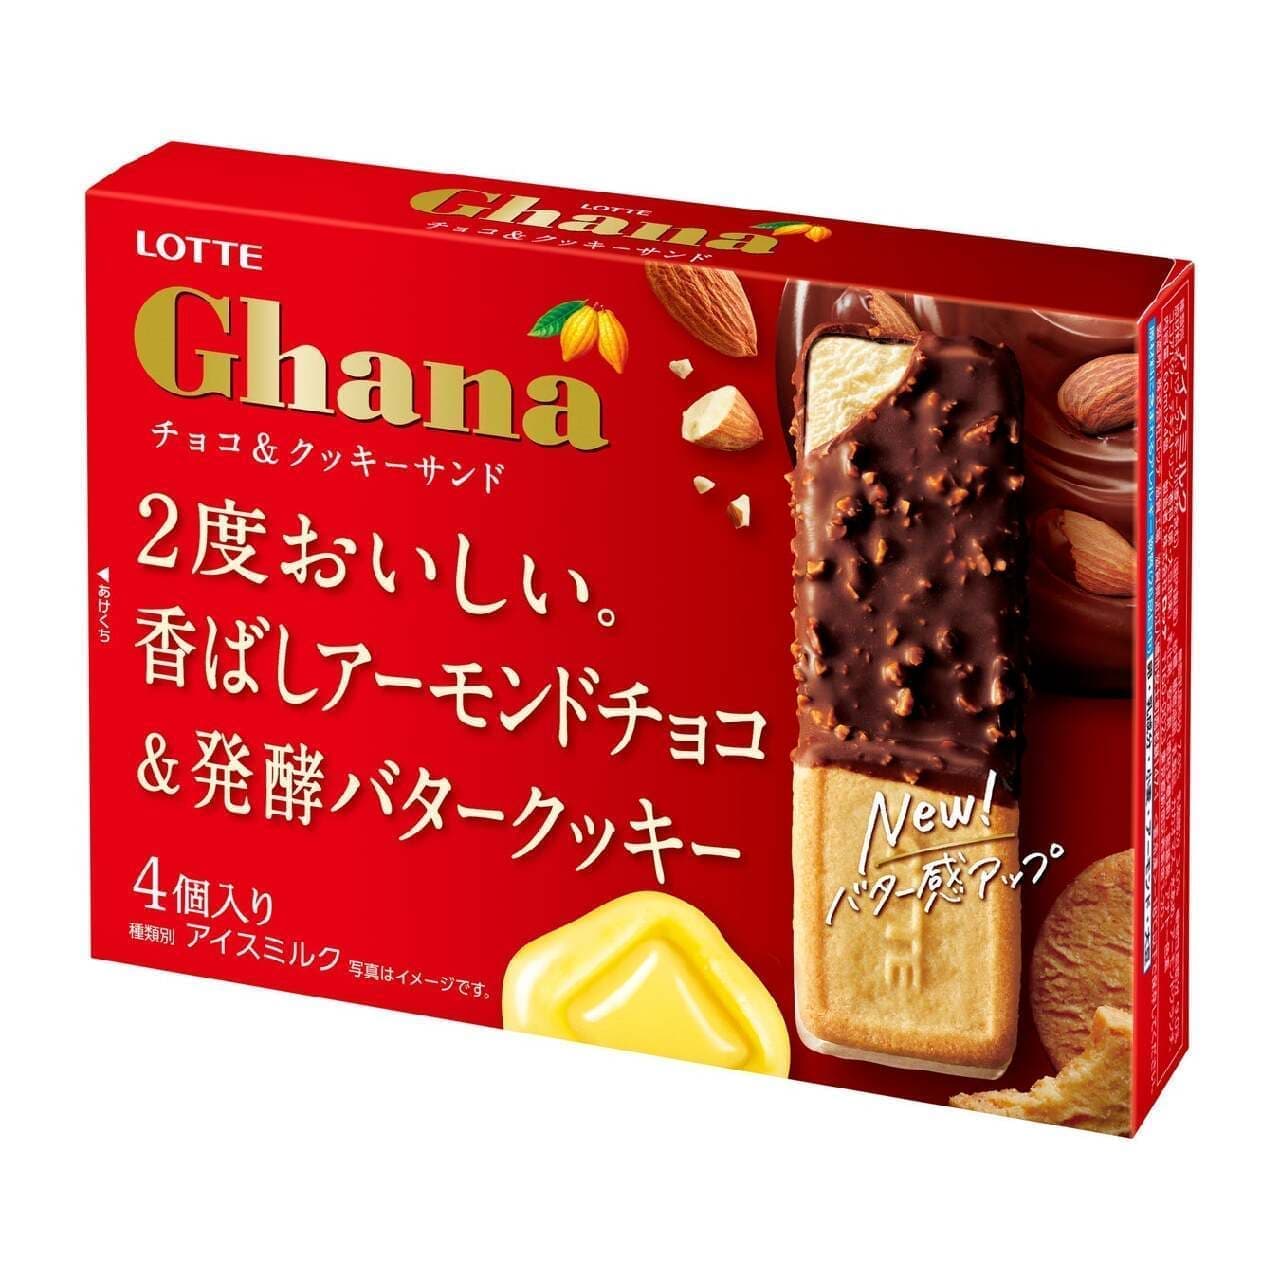 Lotte "Ghana Chocolate & Cookie Sandwich Multi".